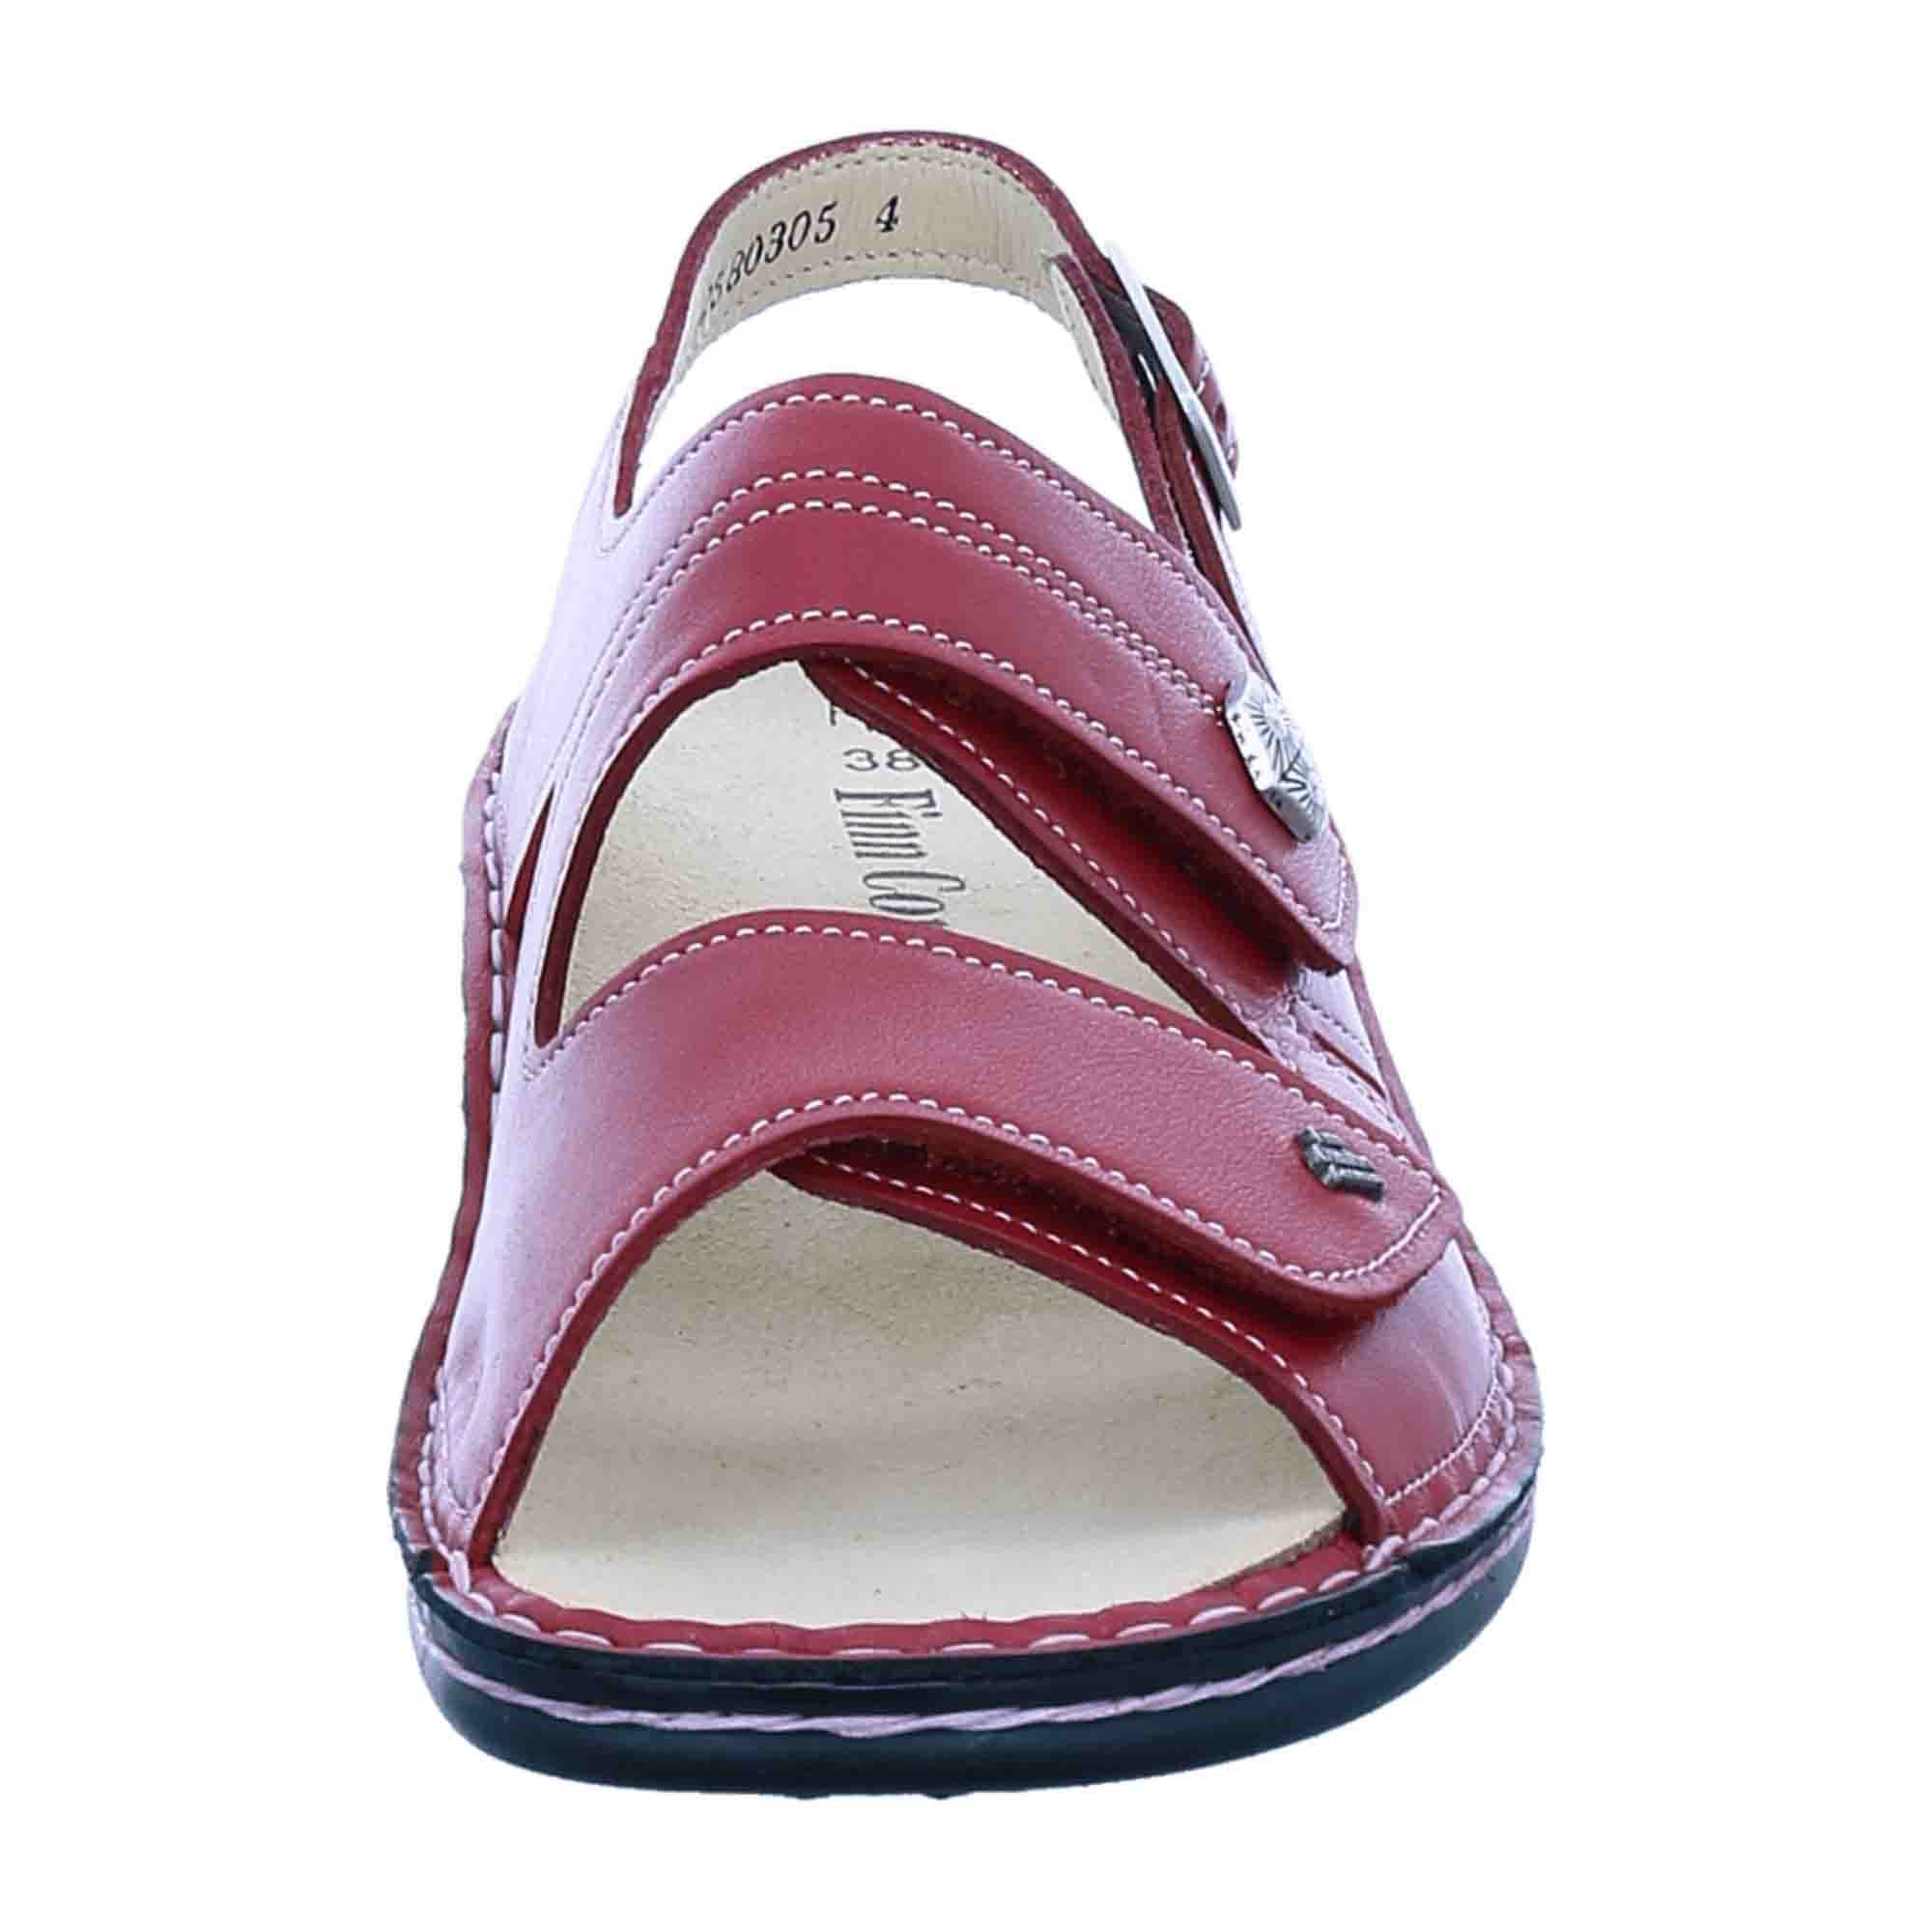 Finn Comfort Milos Women's Sandals in Vibrant Red | Stylish & Comfortable